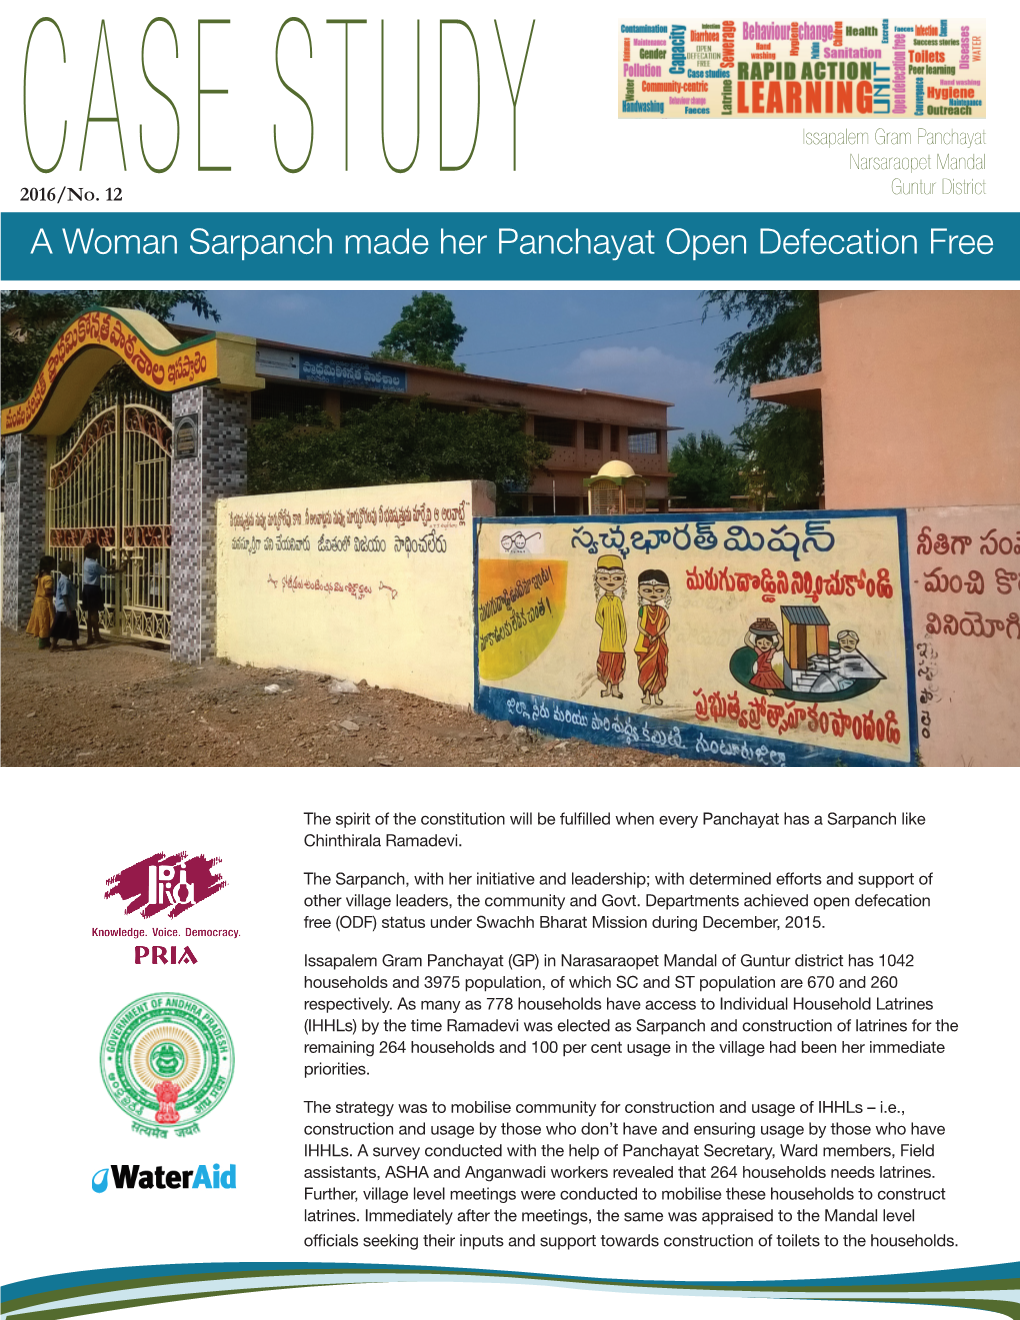 Woman Sarpanch Makes Her Panchayat Open Defecation Free